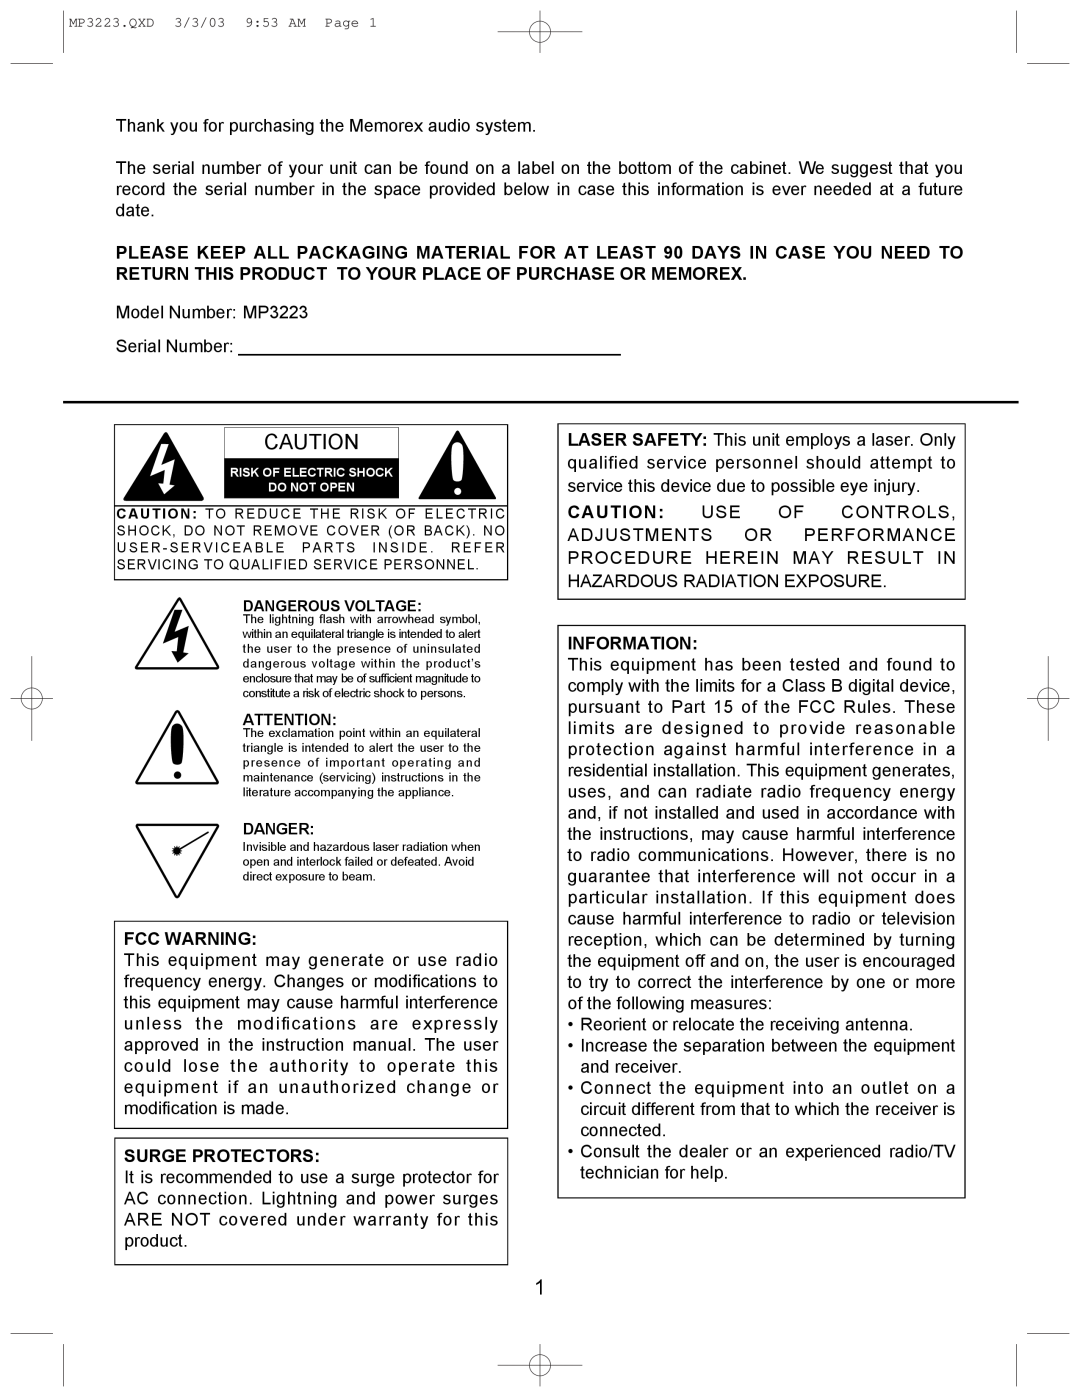 Memorex MP3223 manual Fcc Warning, Surge Protectors, Information 